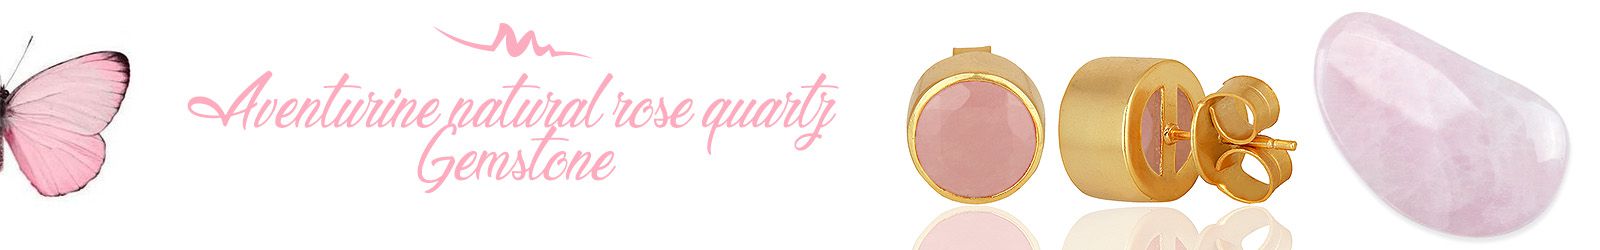 Online Aventurine Rose Quartz Silver Jewelry Store in Jaipur